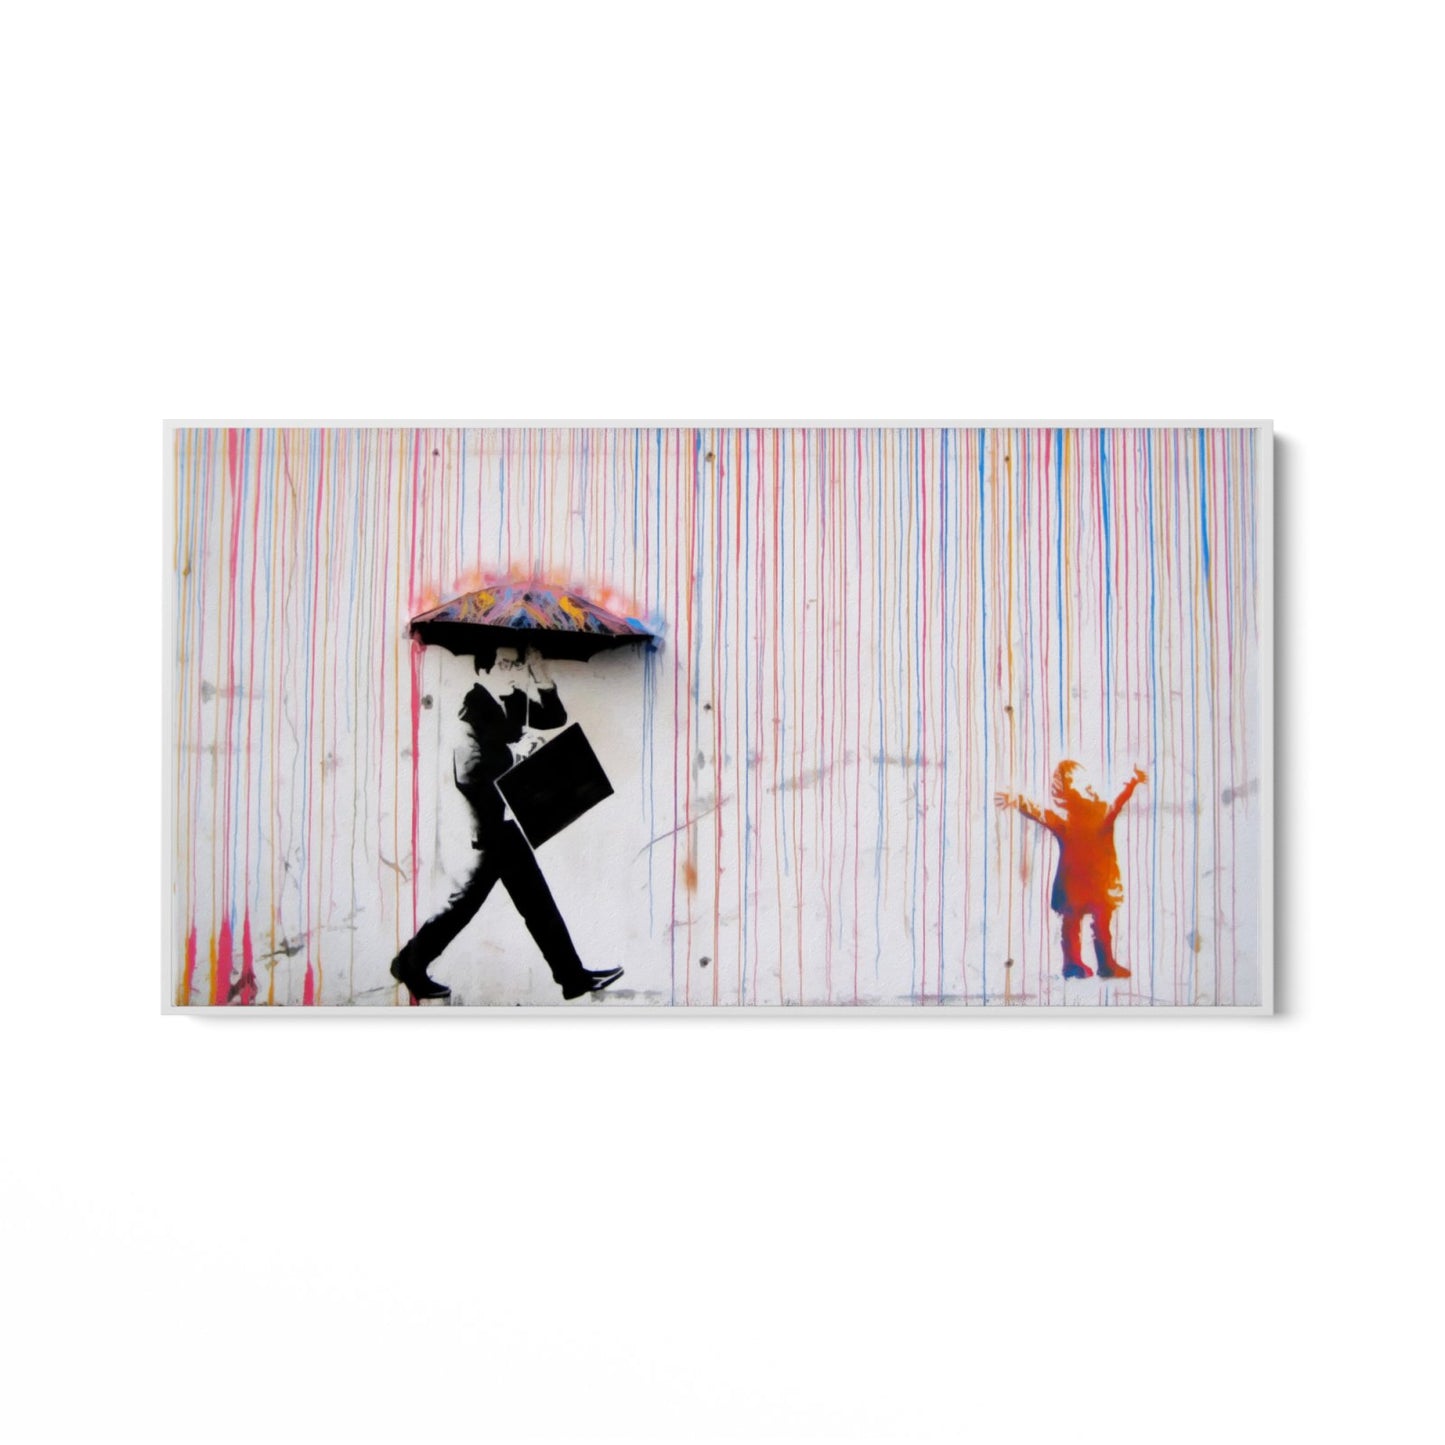 Spalvotas lietus, Banksy